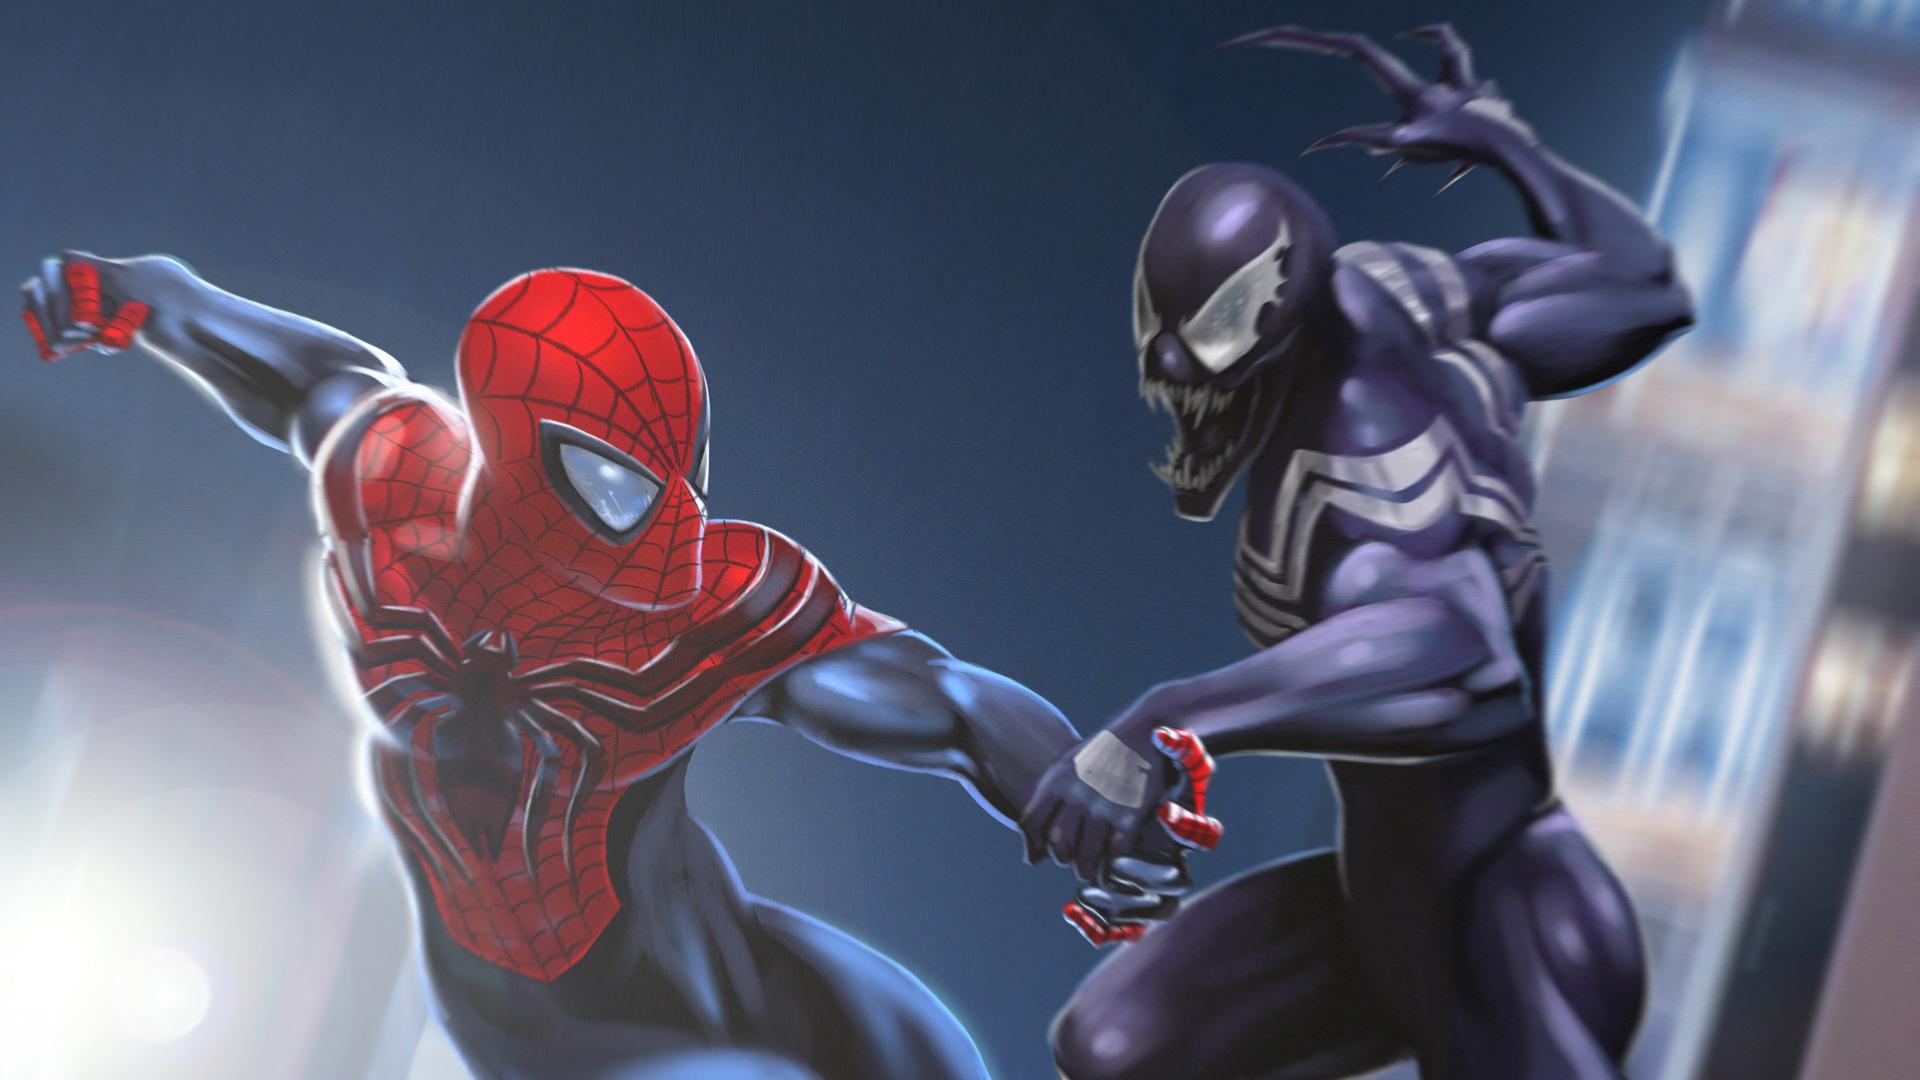 Venom Vs Spiderman Art, HD Superheroes, 4k Wallpapers, Image, Backgrounds, ...